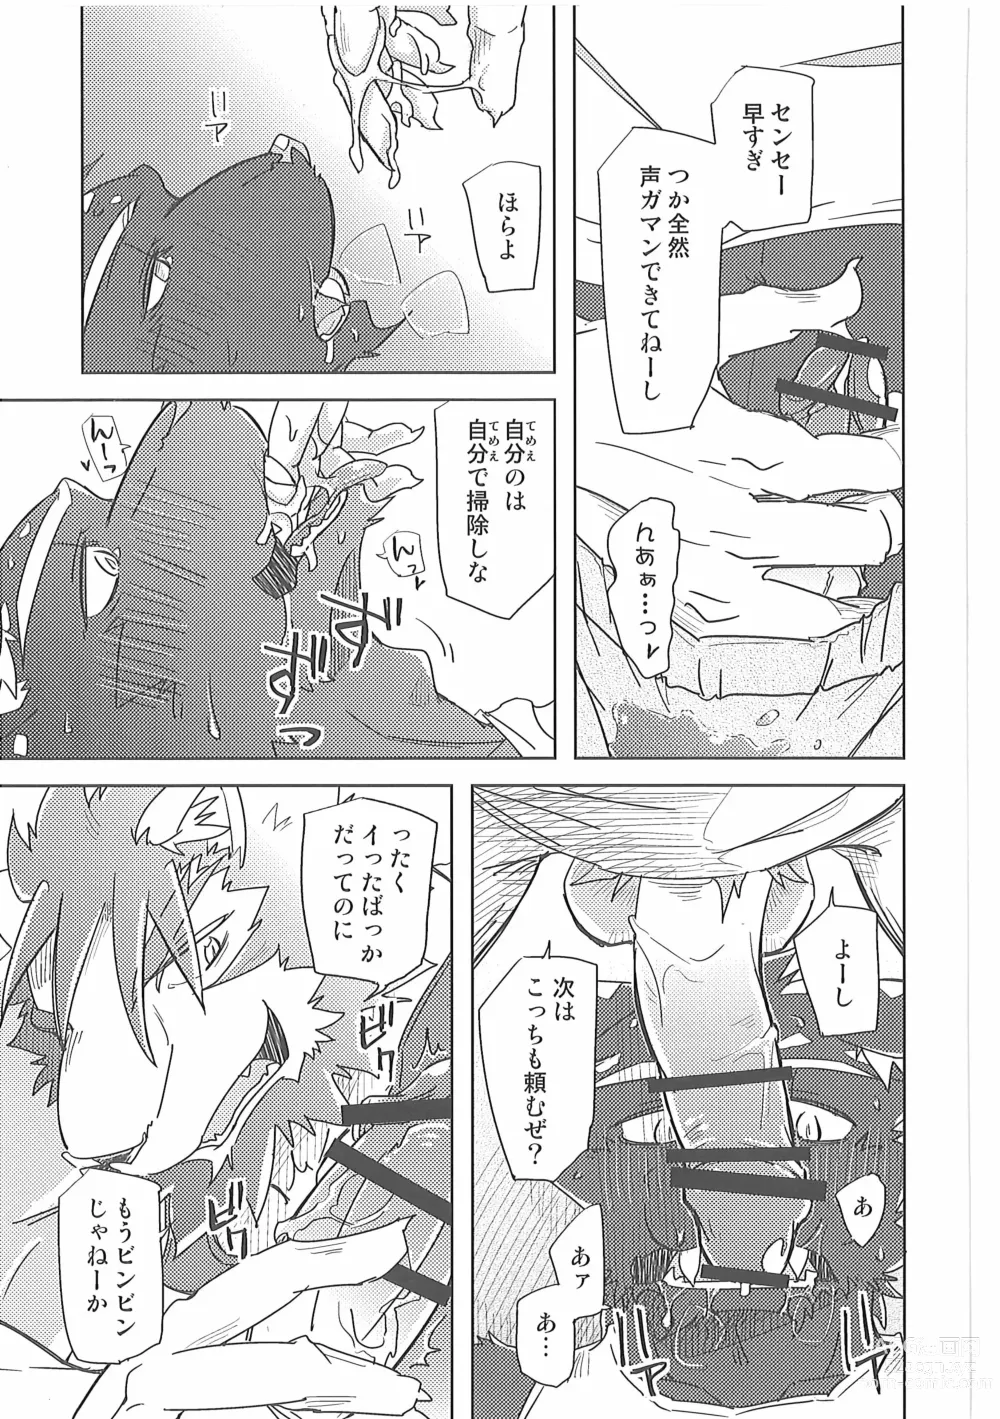 Page 24 of doujinshi Crazy Waltz